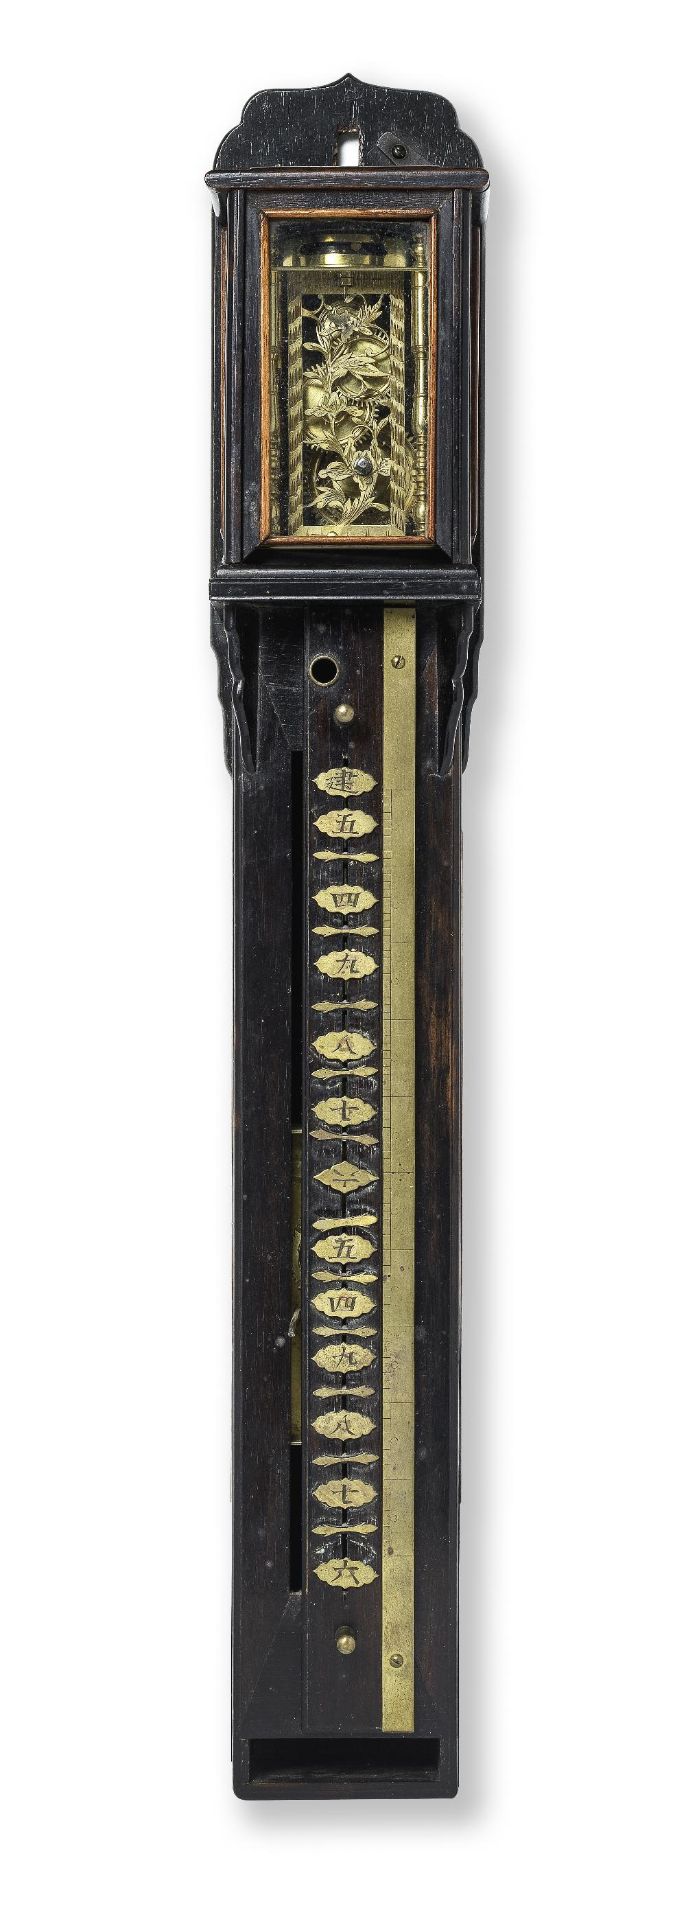 A rare 19th century Japanese hardwood striking pillar clock